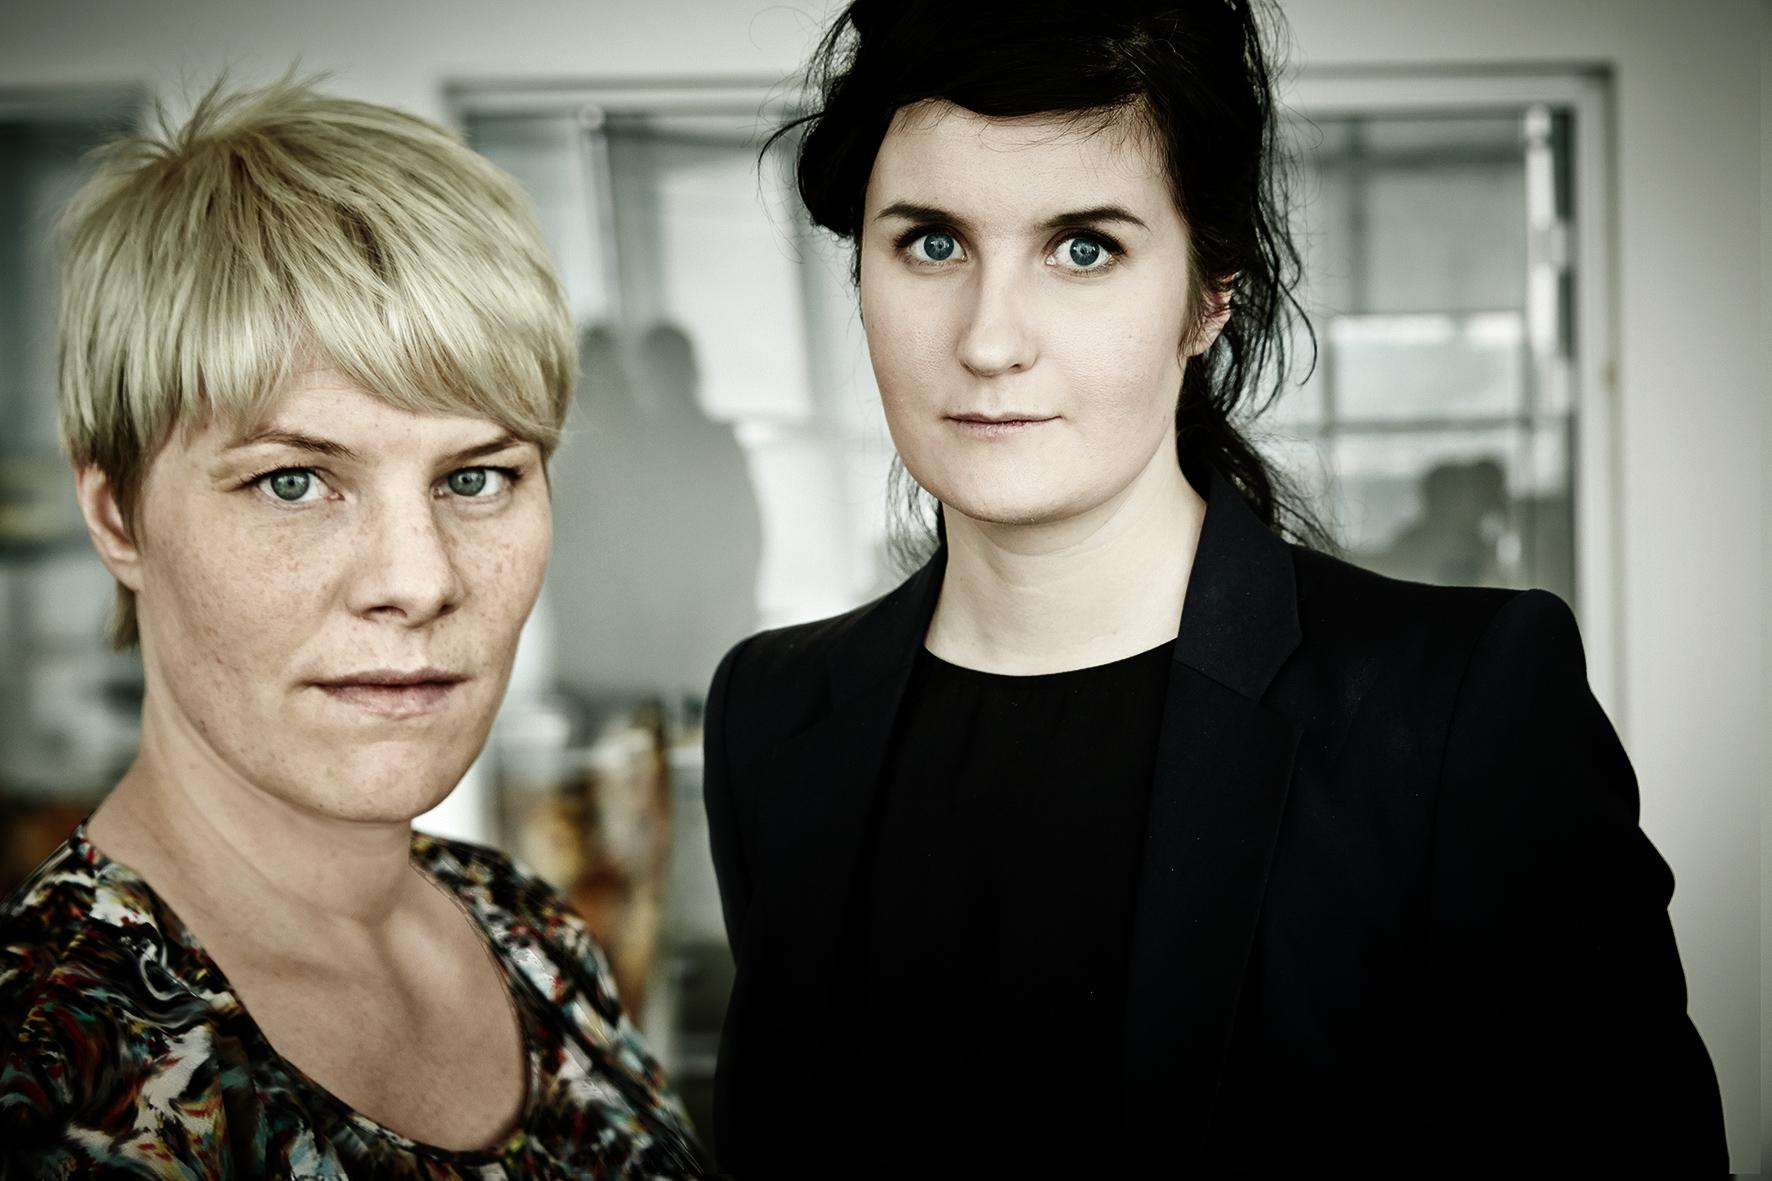 Anna Haupt and Terese Alstin at Hövding Sverige AB